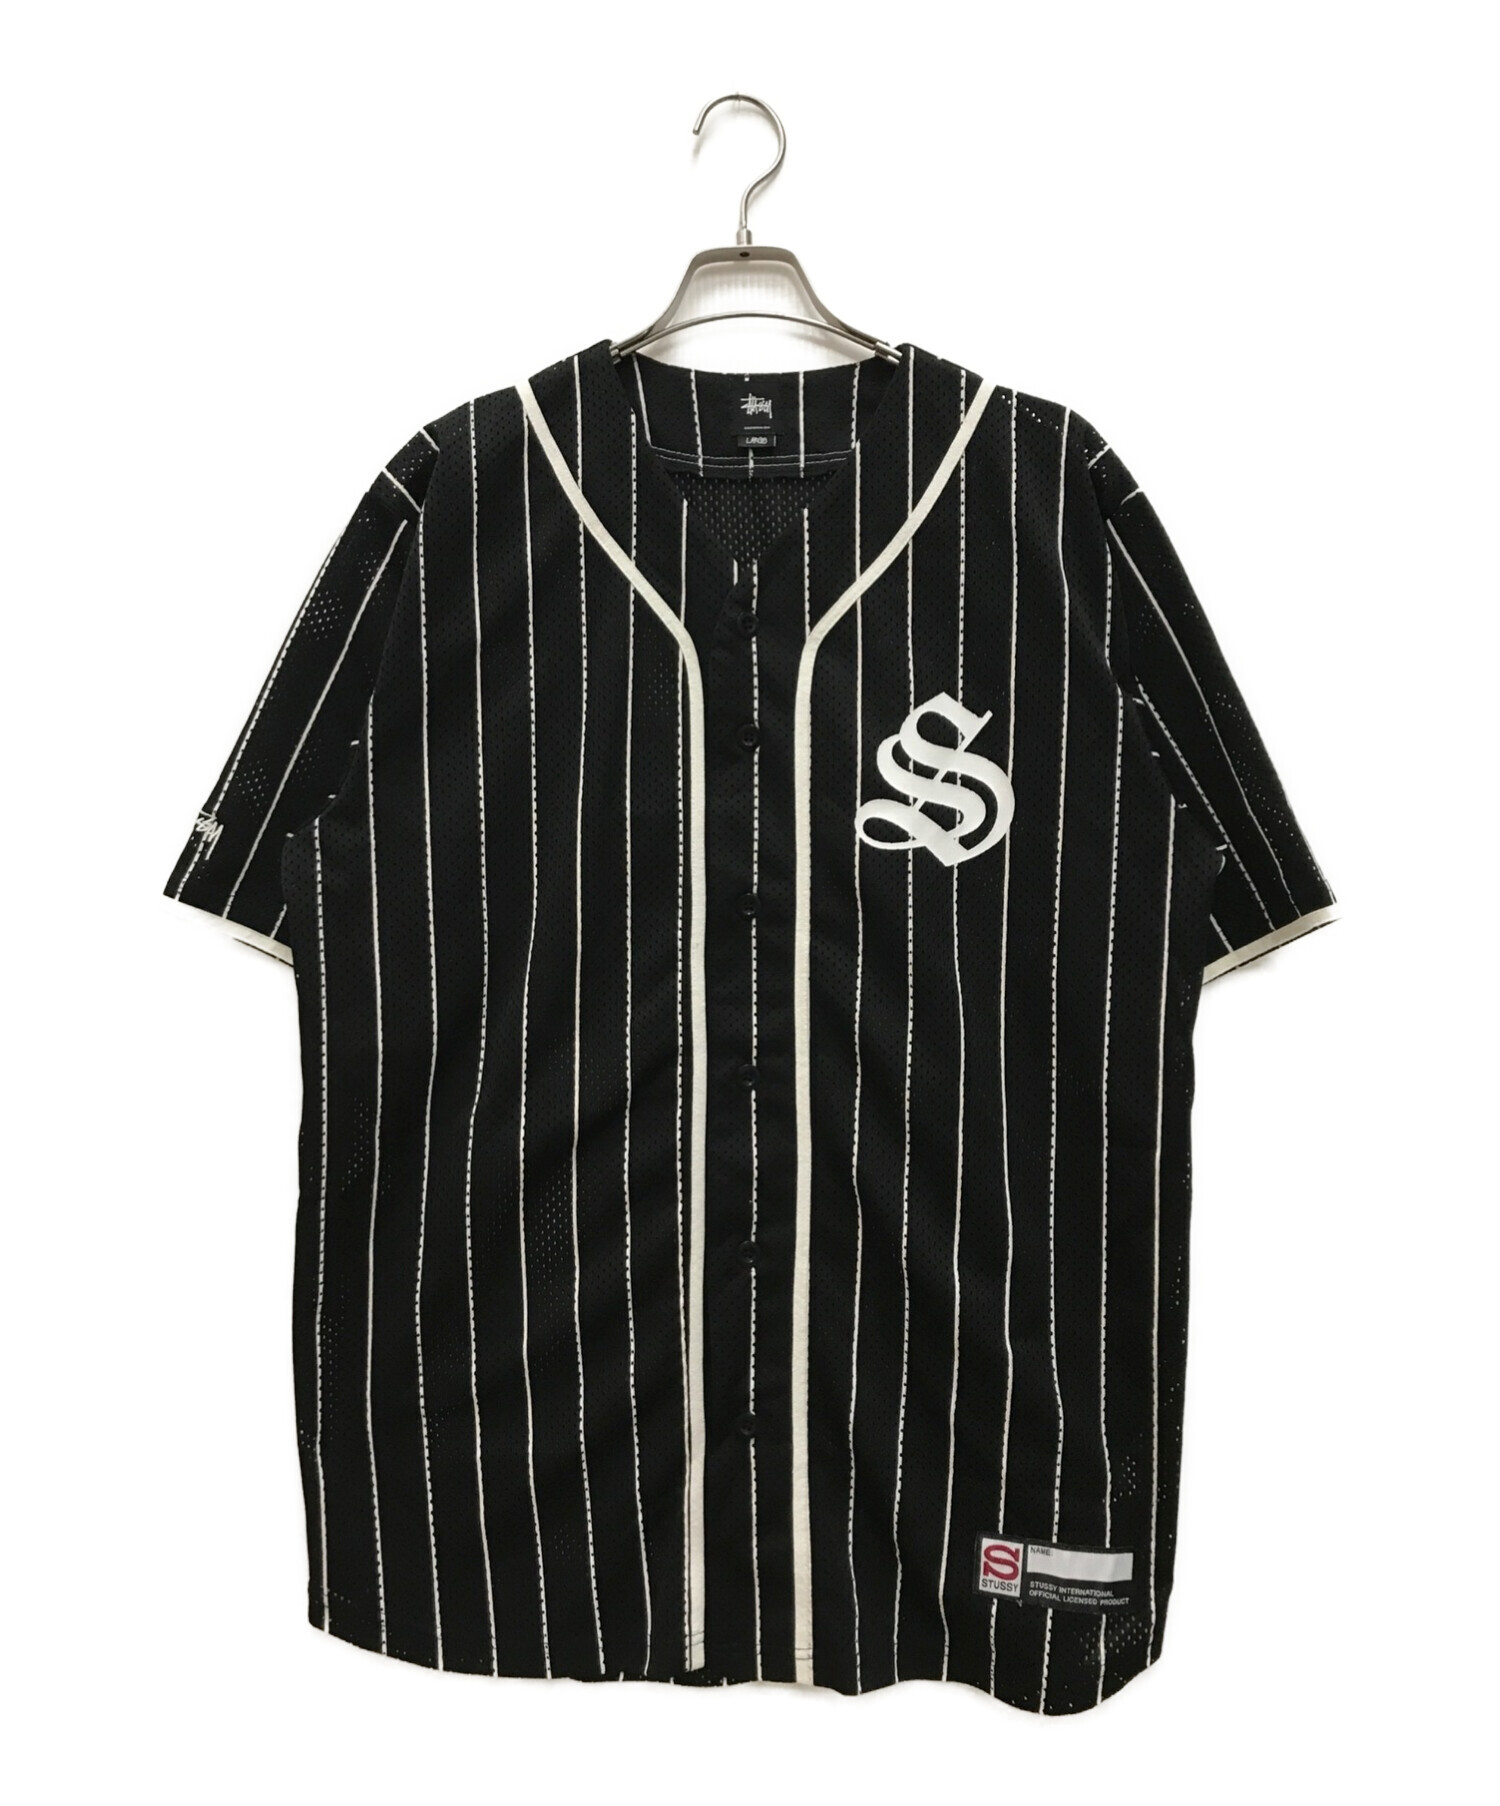 stussy (ステューシー) ベースボールシャツ ブラック サイズ:L